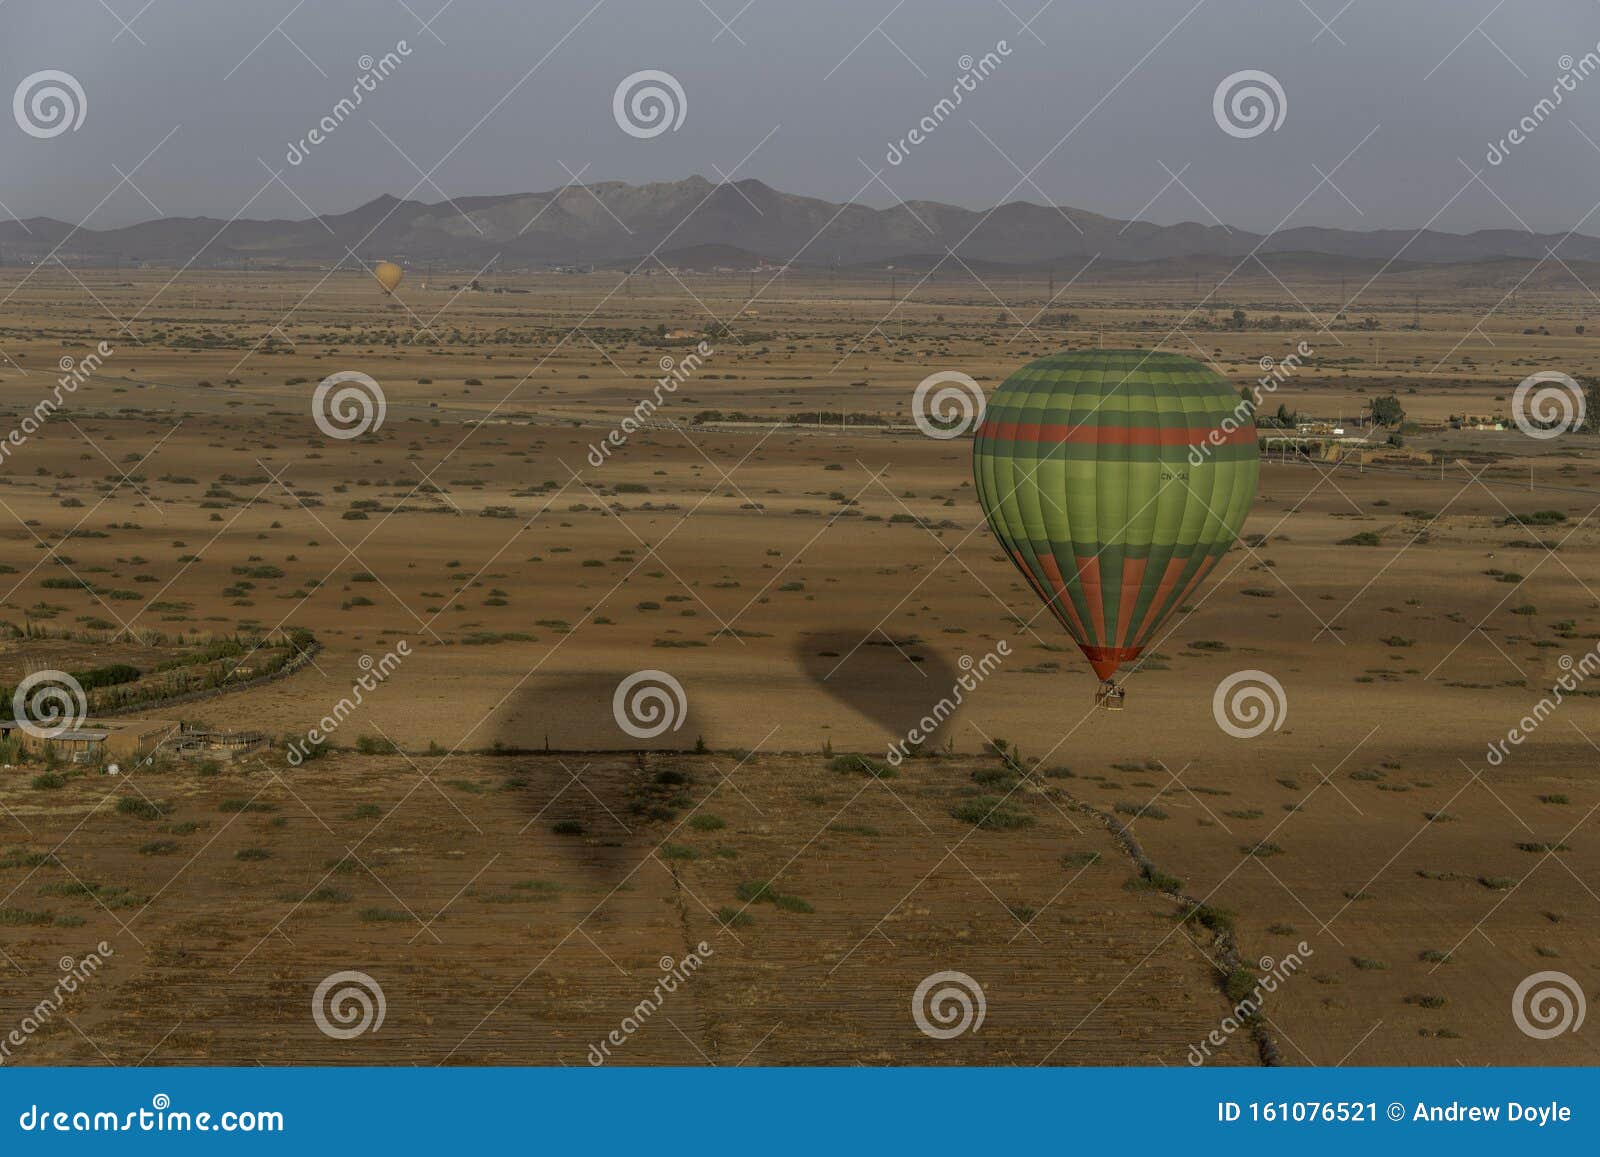 hot air balloons over desert pastureland of morocco